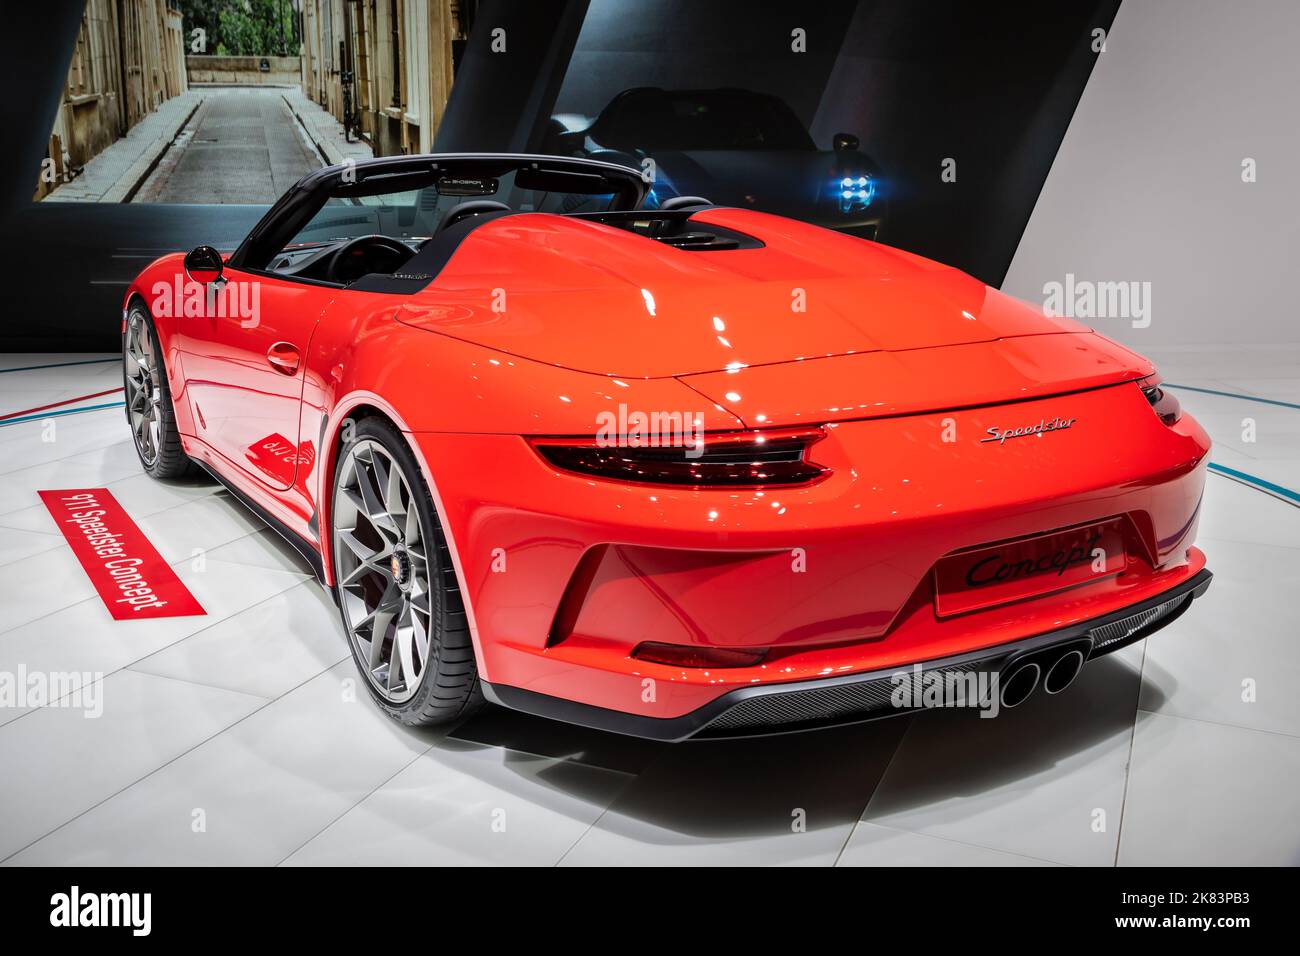 Porsche 911 Speedster sports car showcased at the Paris Motor Show. Paris, France - October 2, 2018. Stock Photo